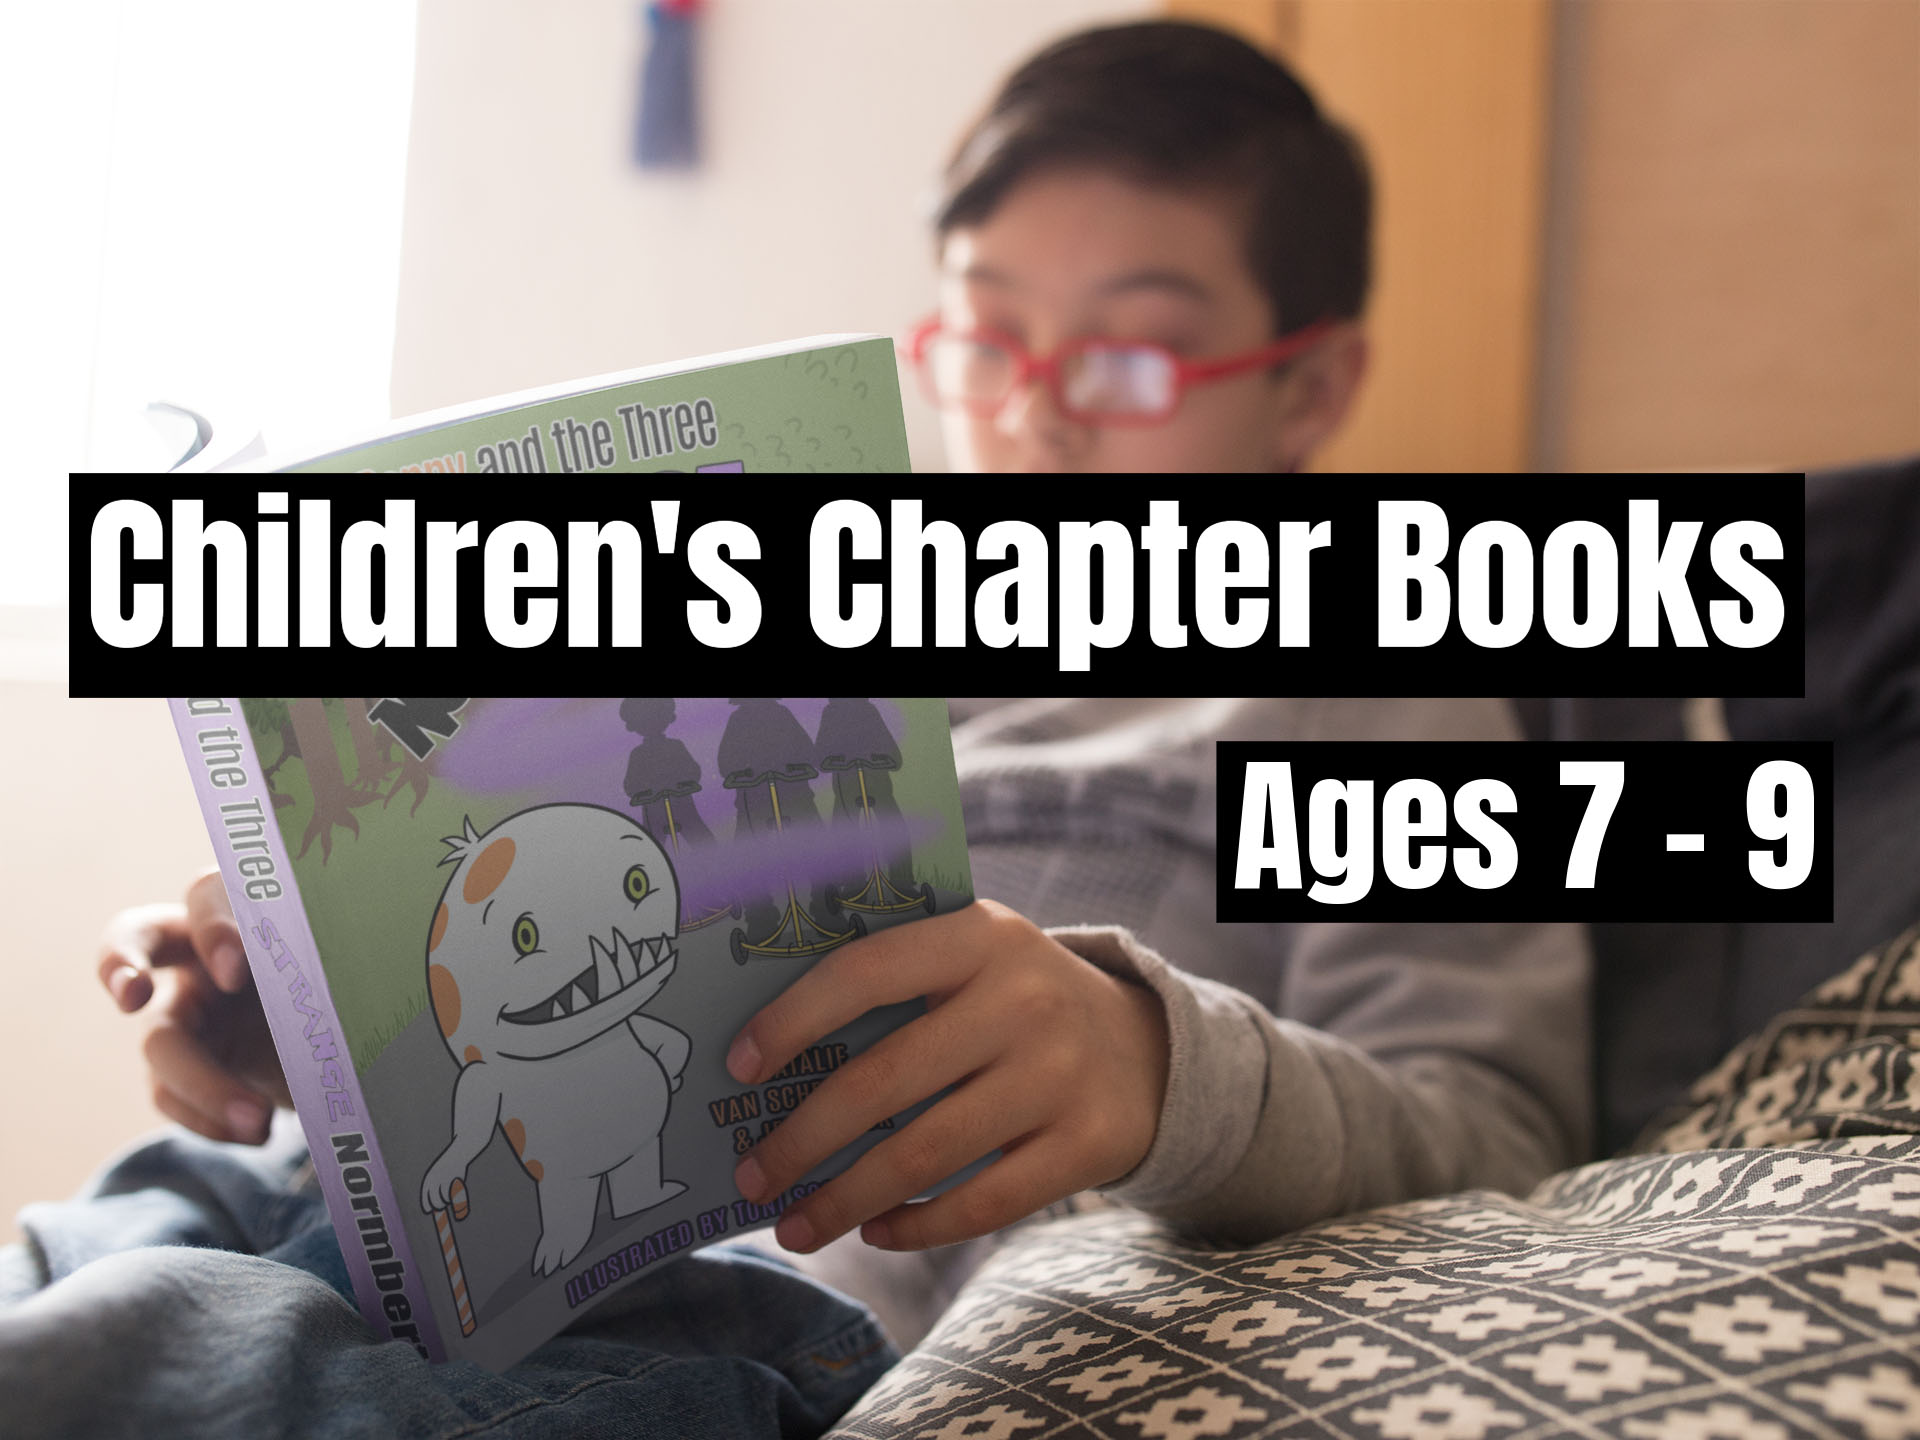 Children's Books Ages 7 - 9